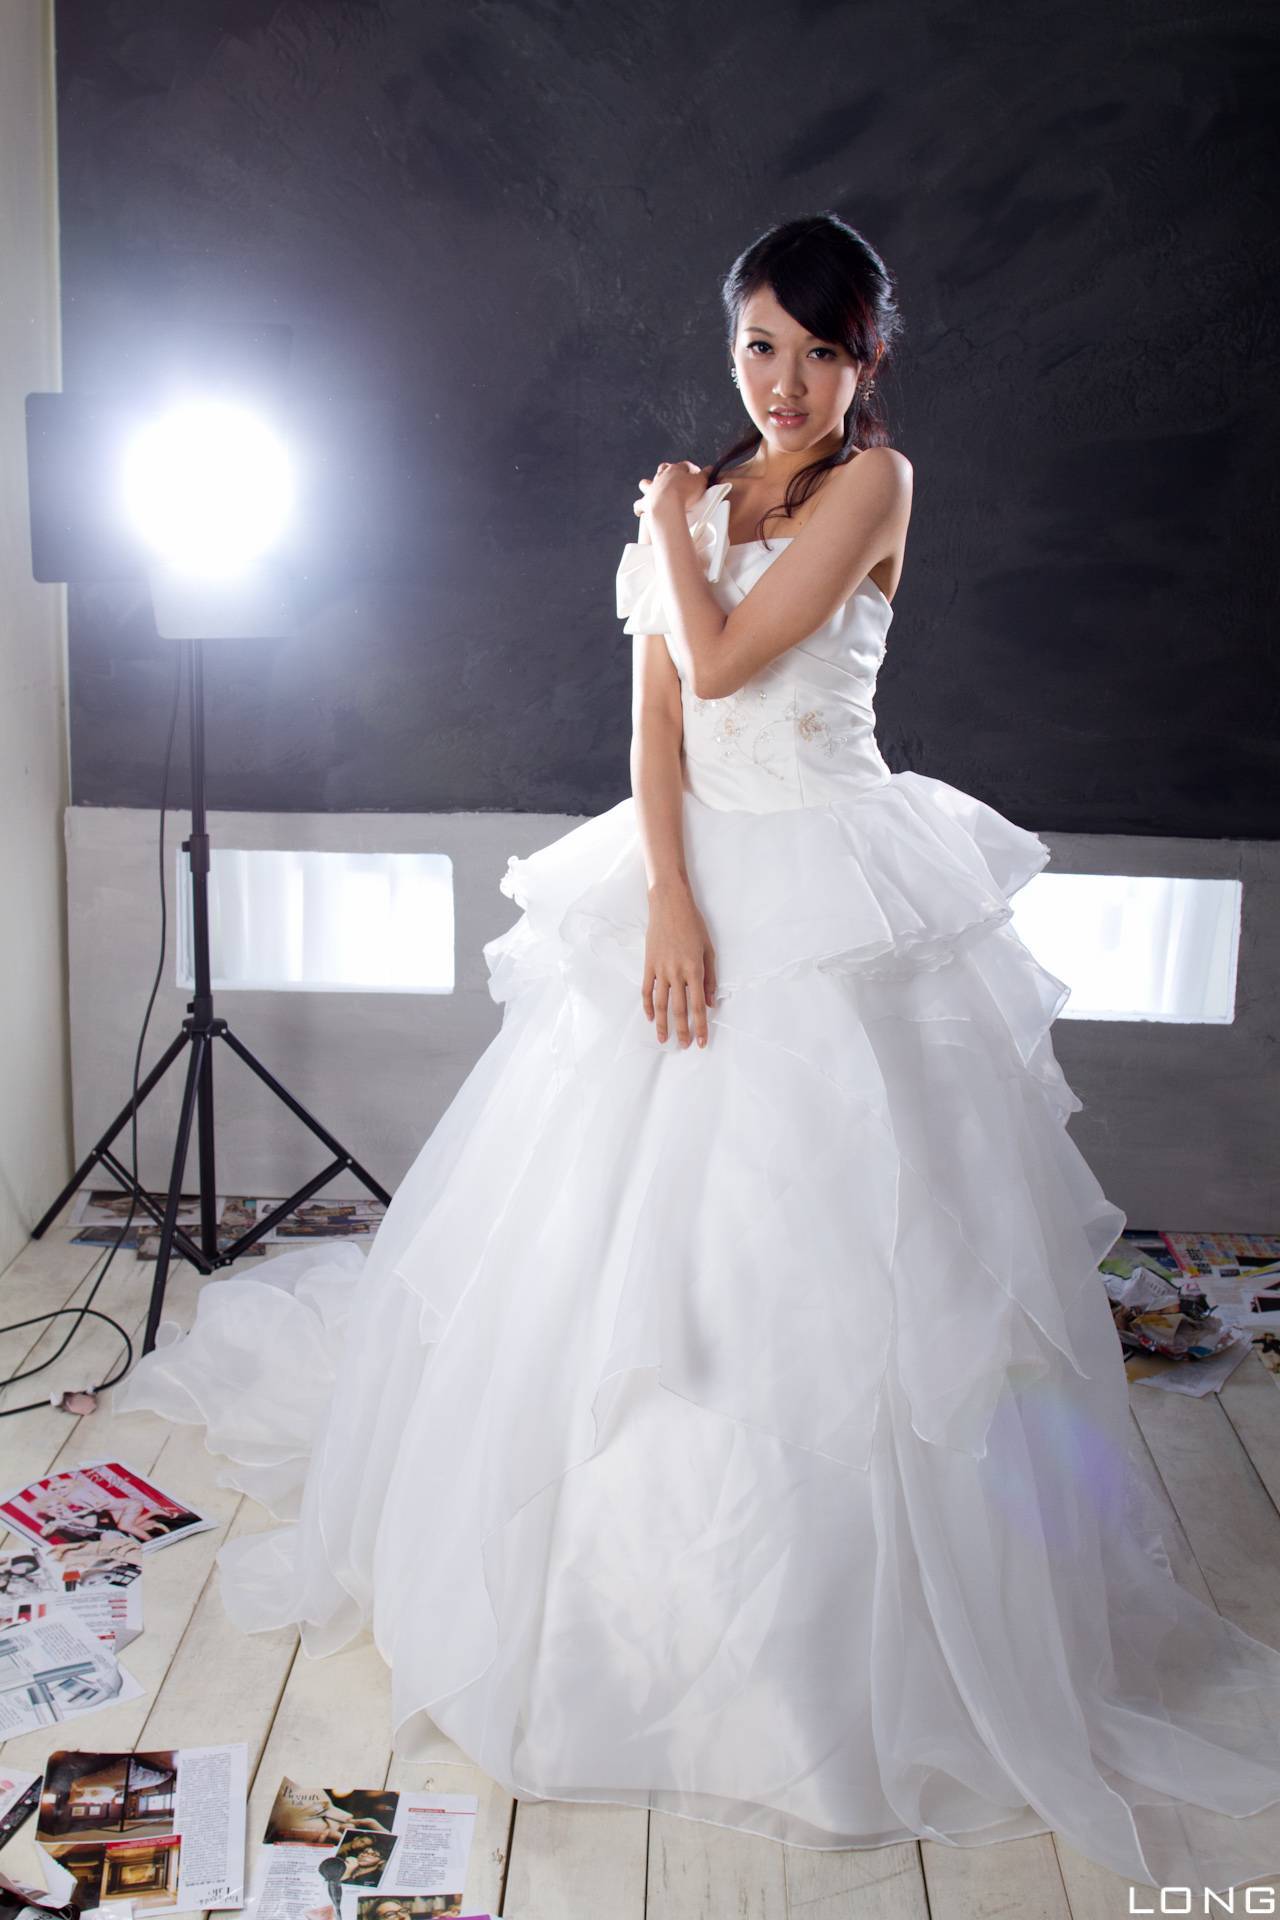 Studio Photo] Jill Weiting's white wedding dress